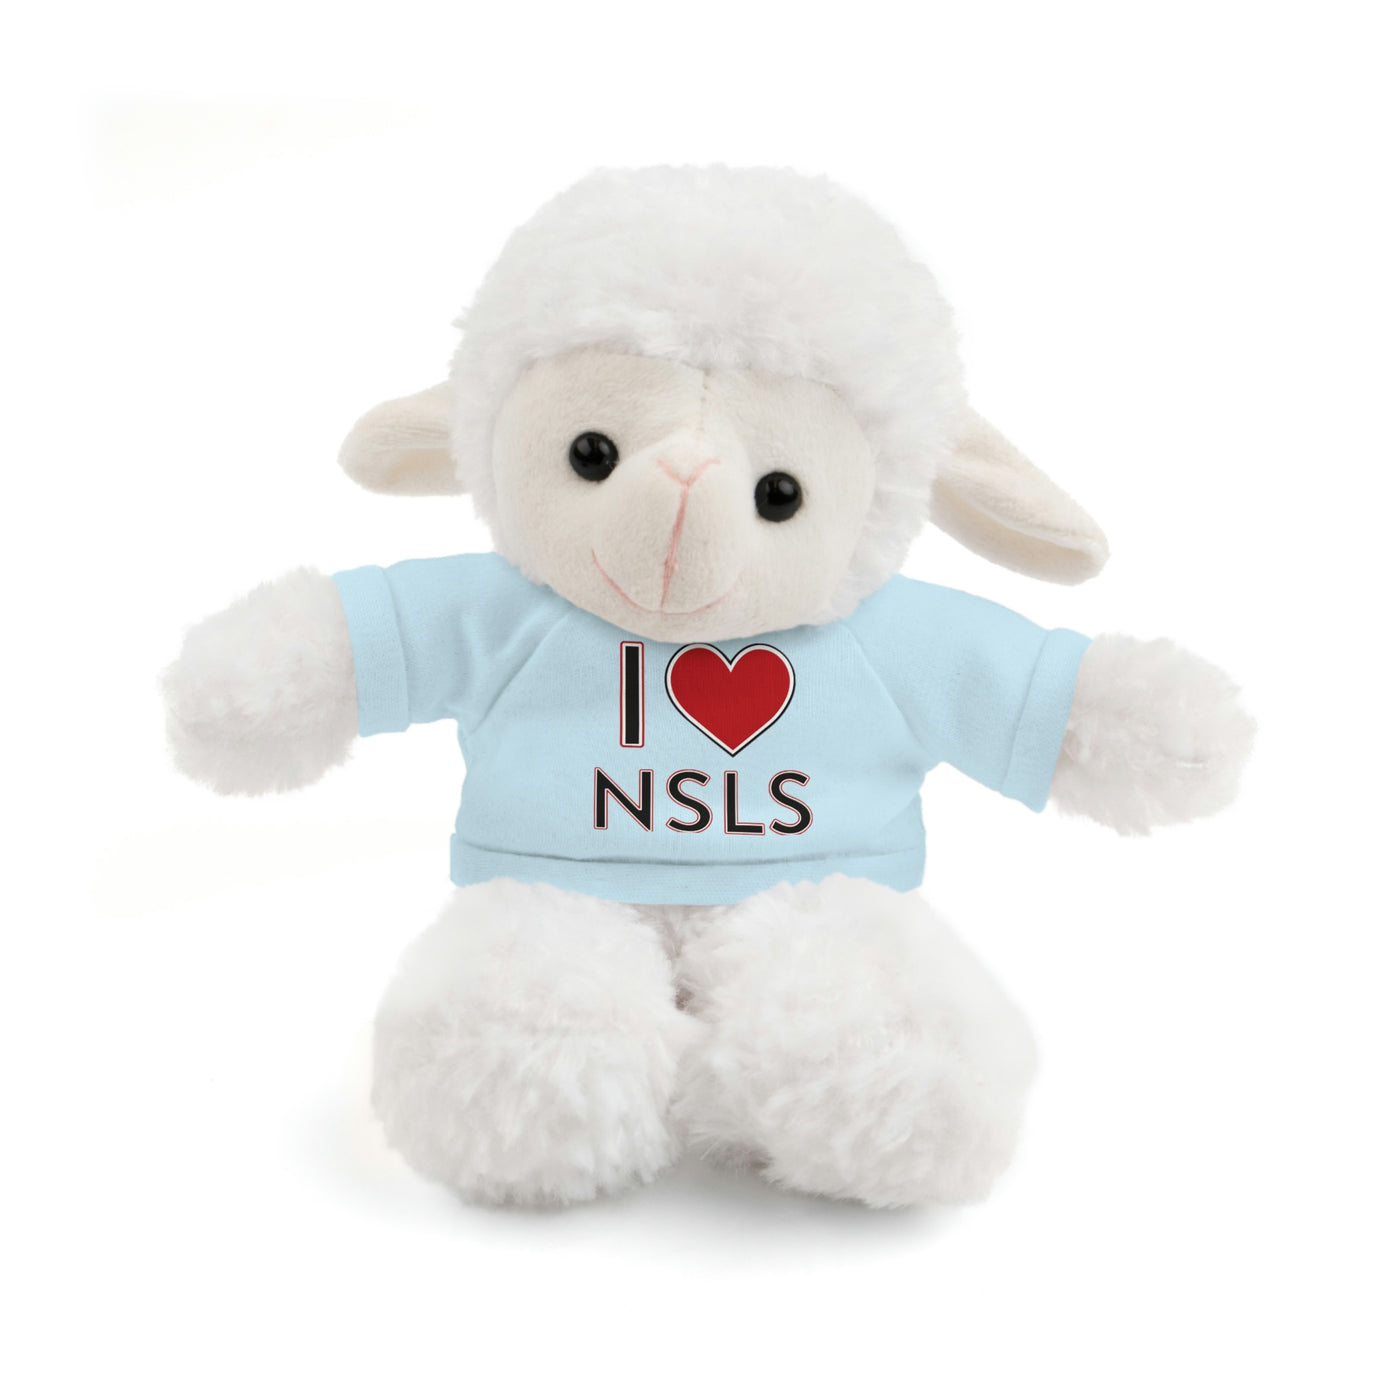 Stuffed Animals with NSLS Tee